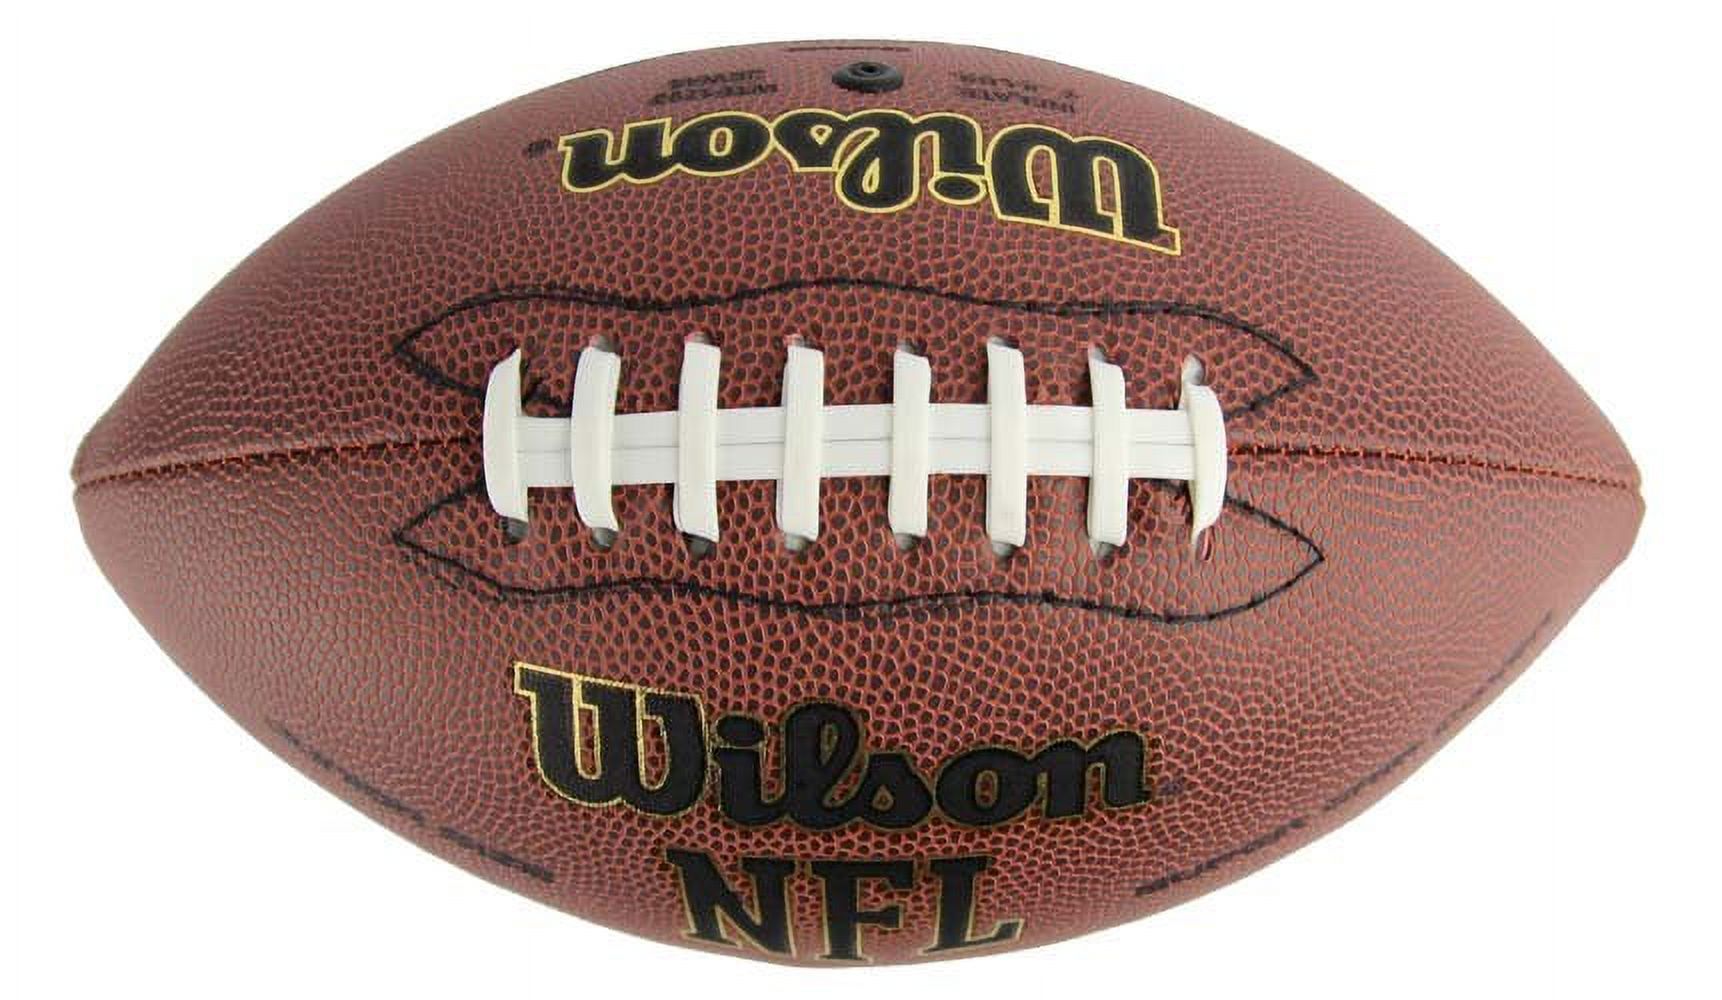 Wilson NFL Super Grip Football - image 4 of 6